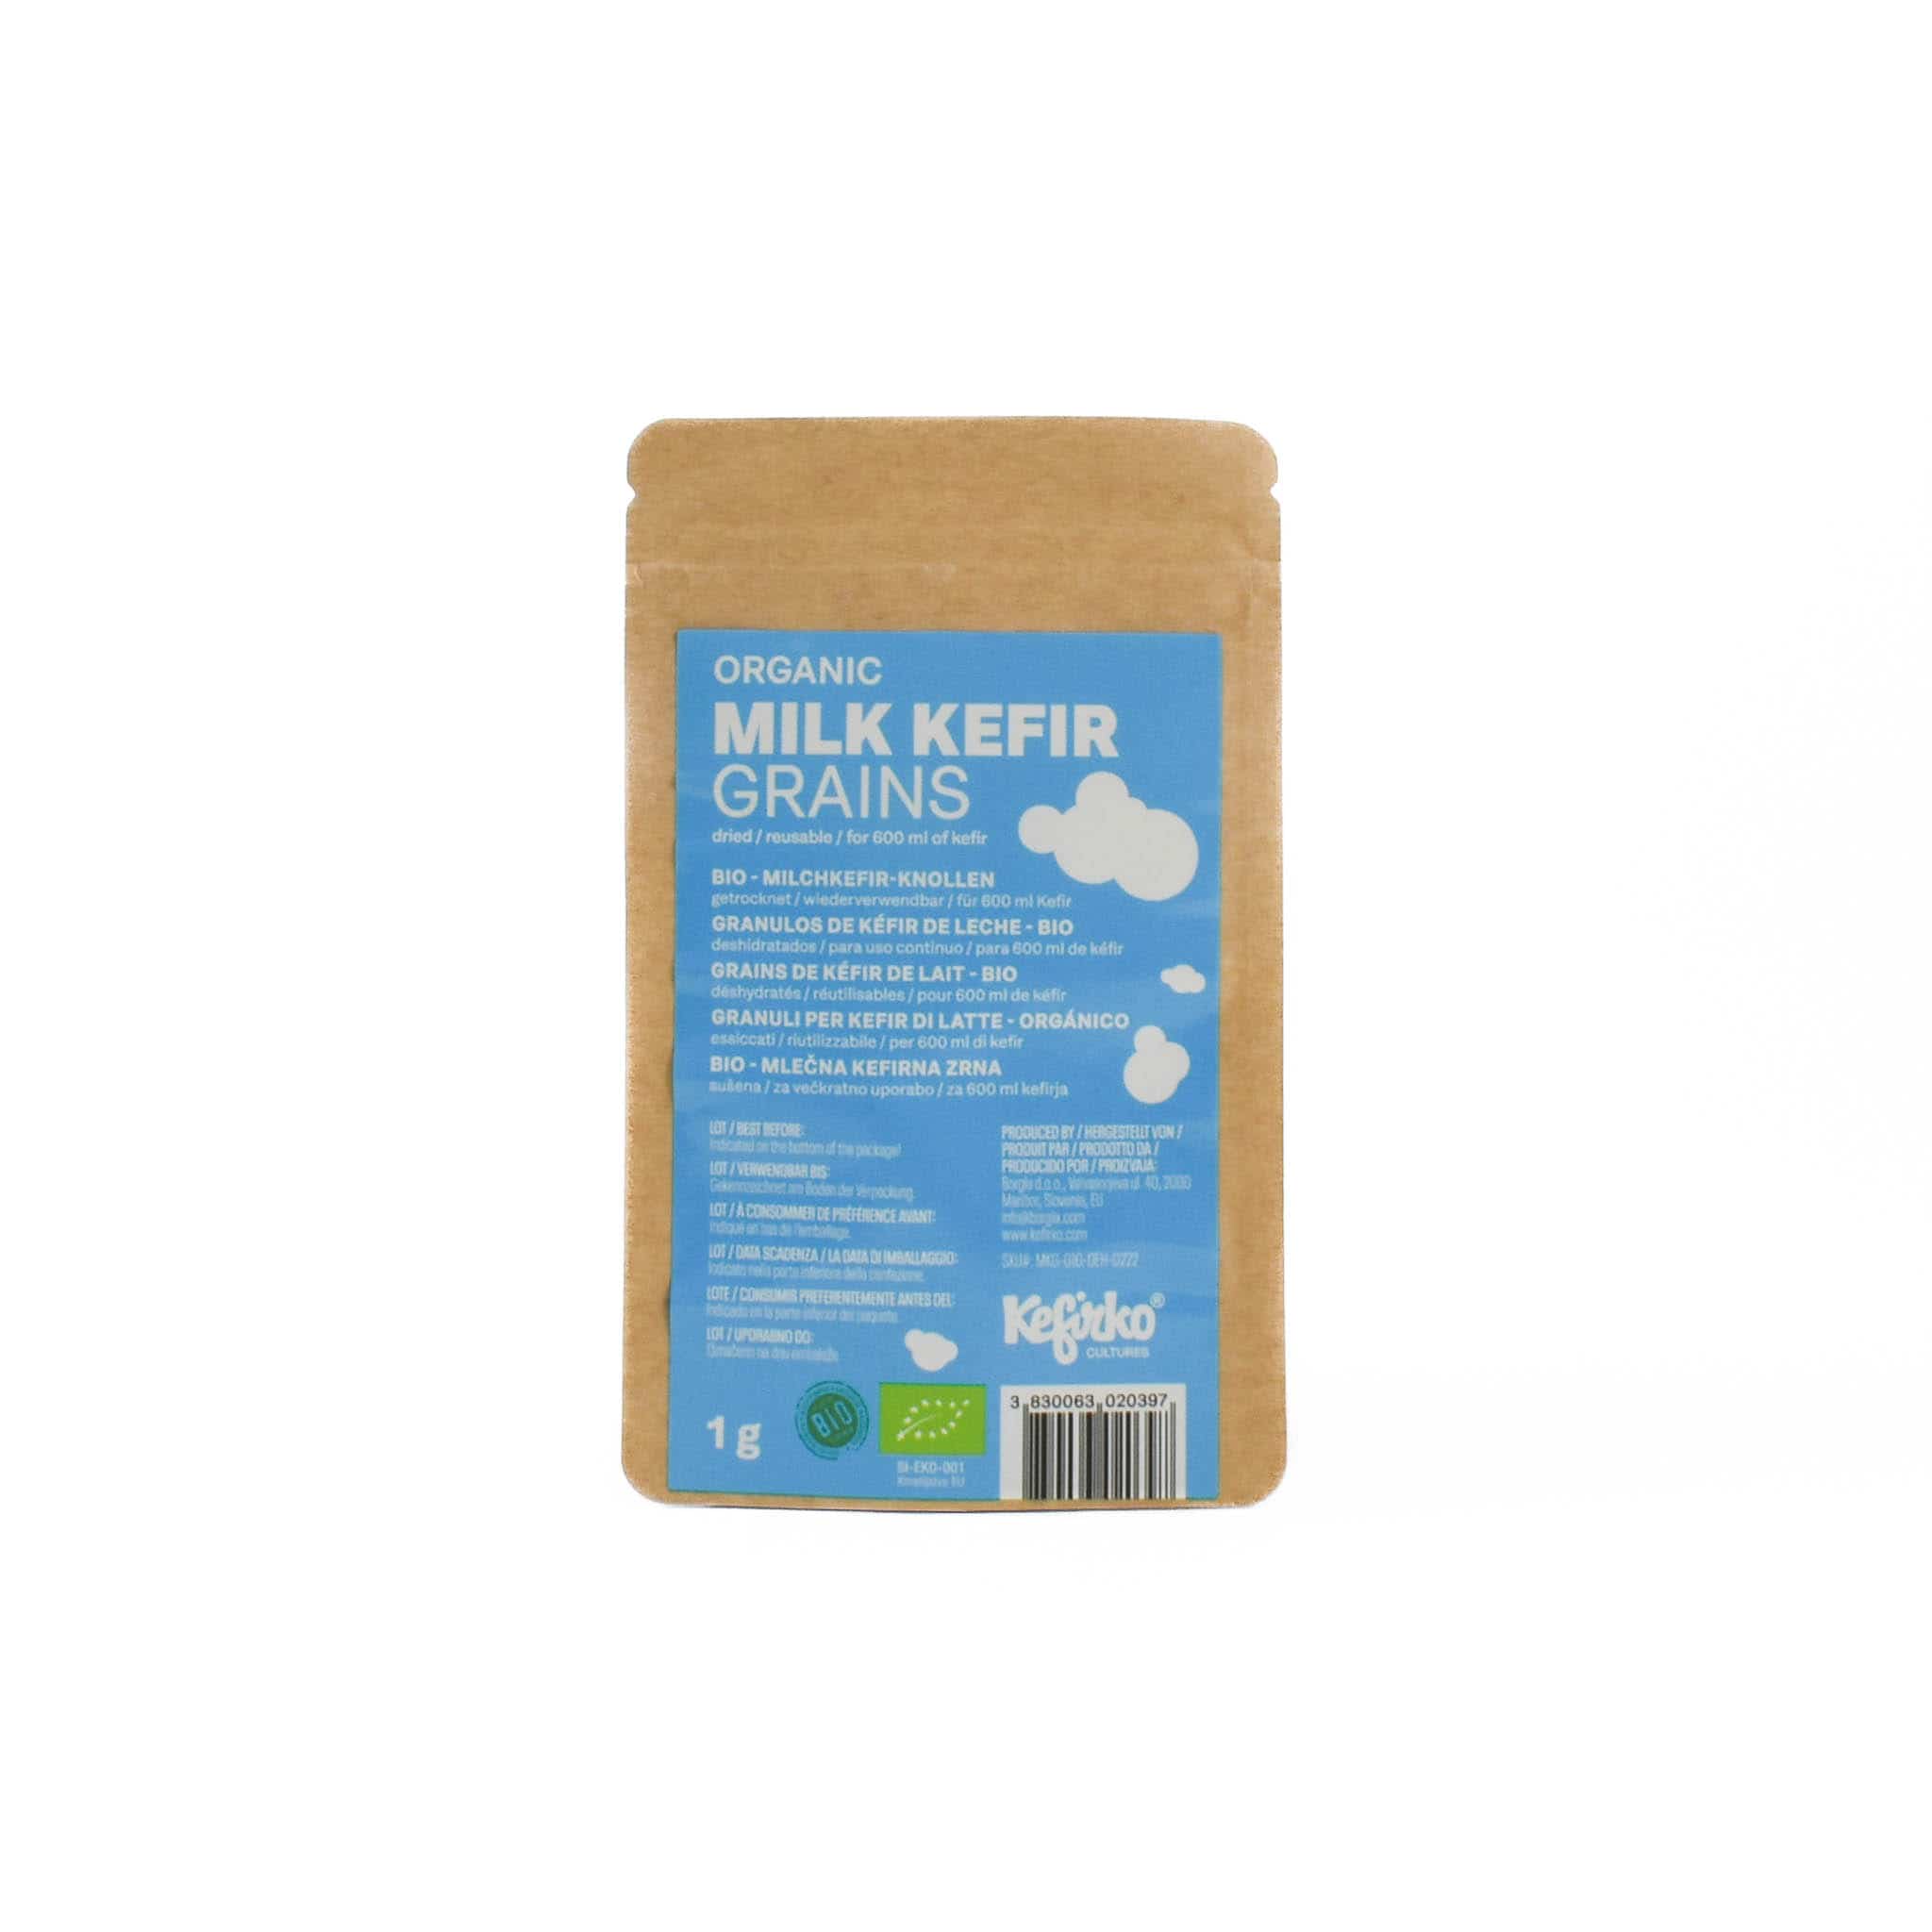 Kerfiko Milk Kefir Grains, 2g